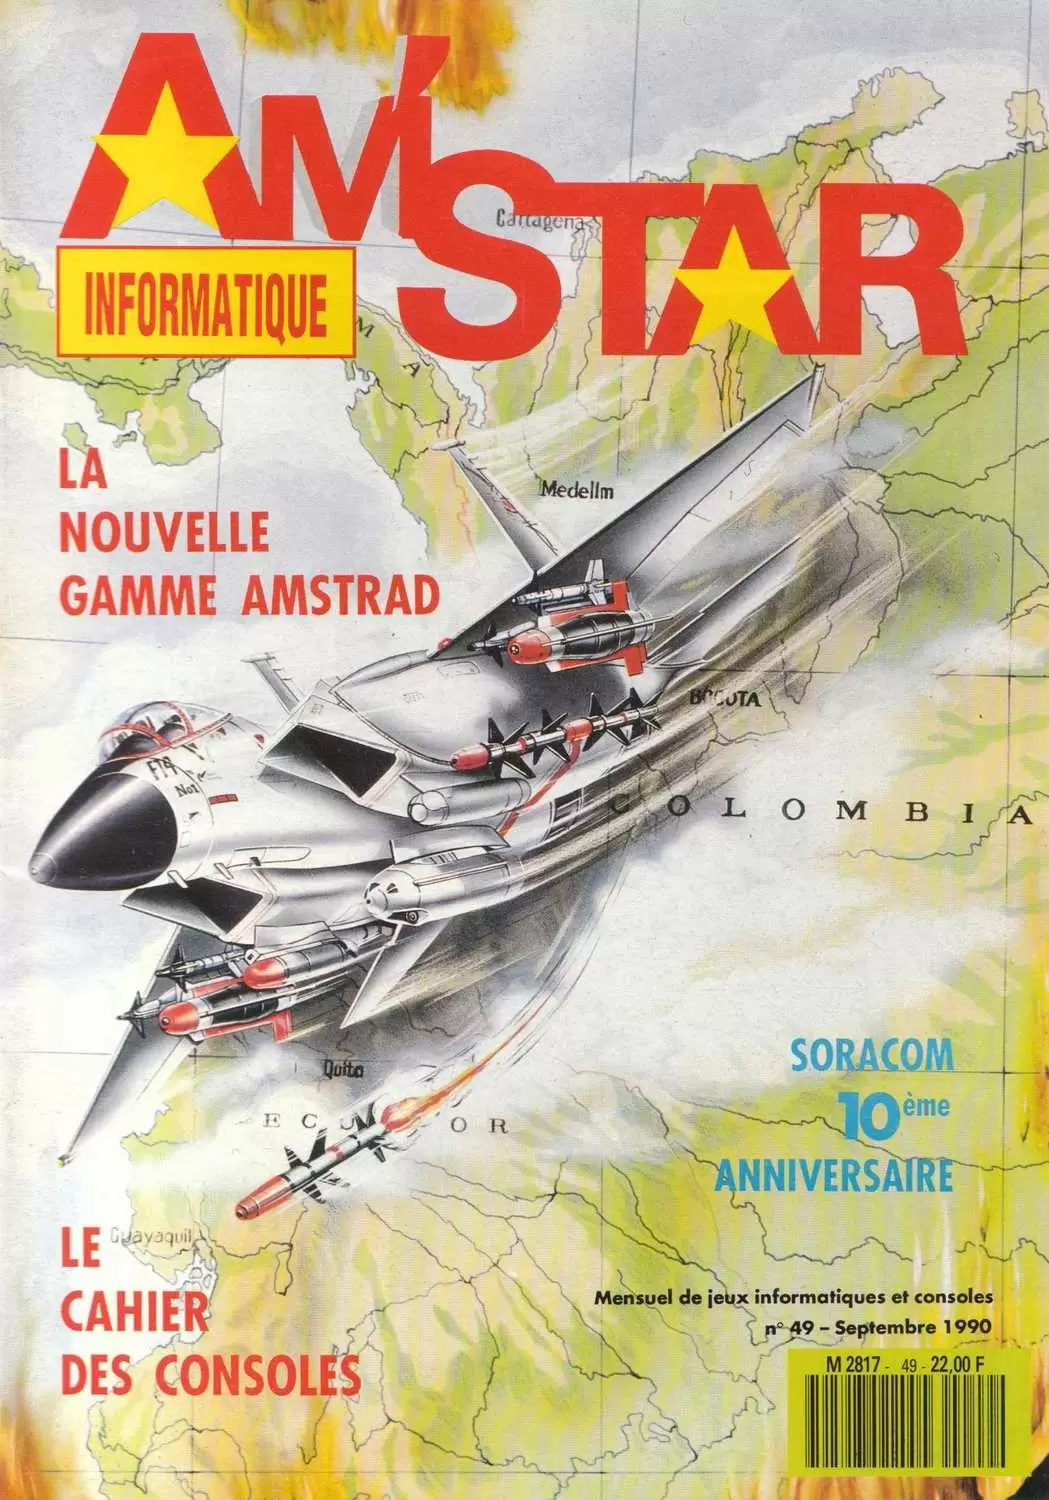 Amstar - Amstar Informatique n°49